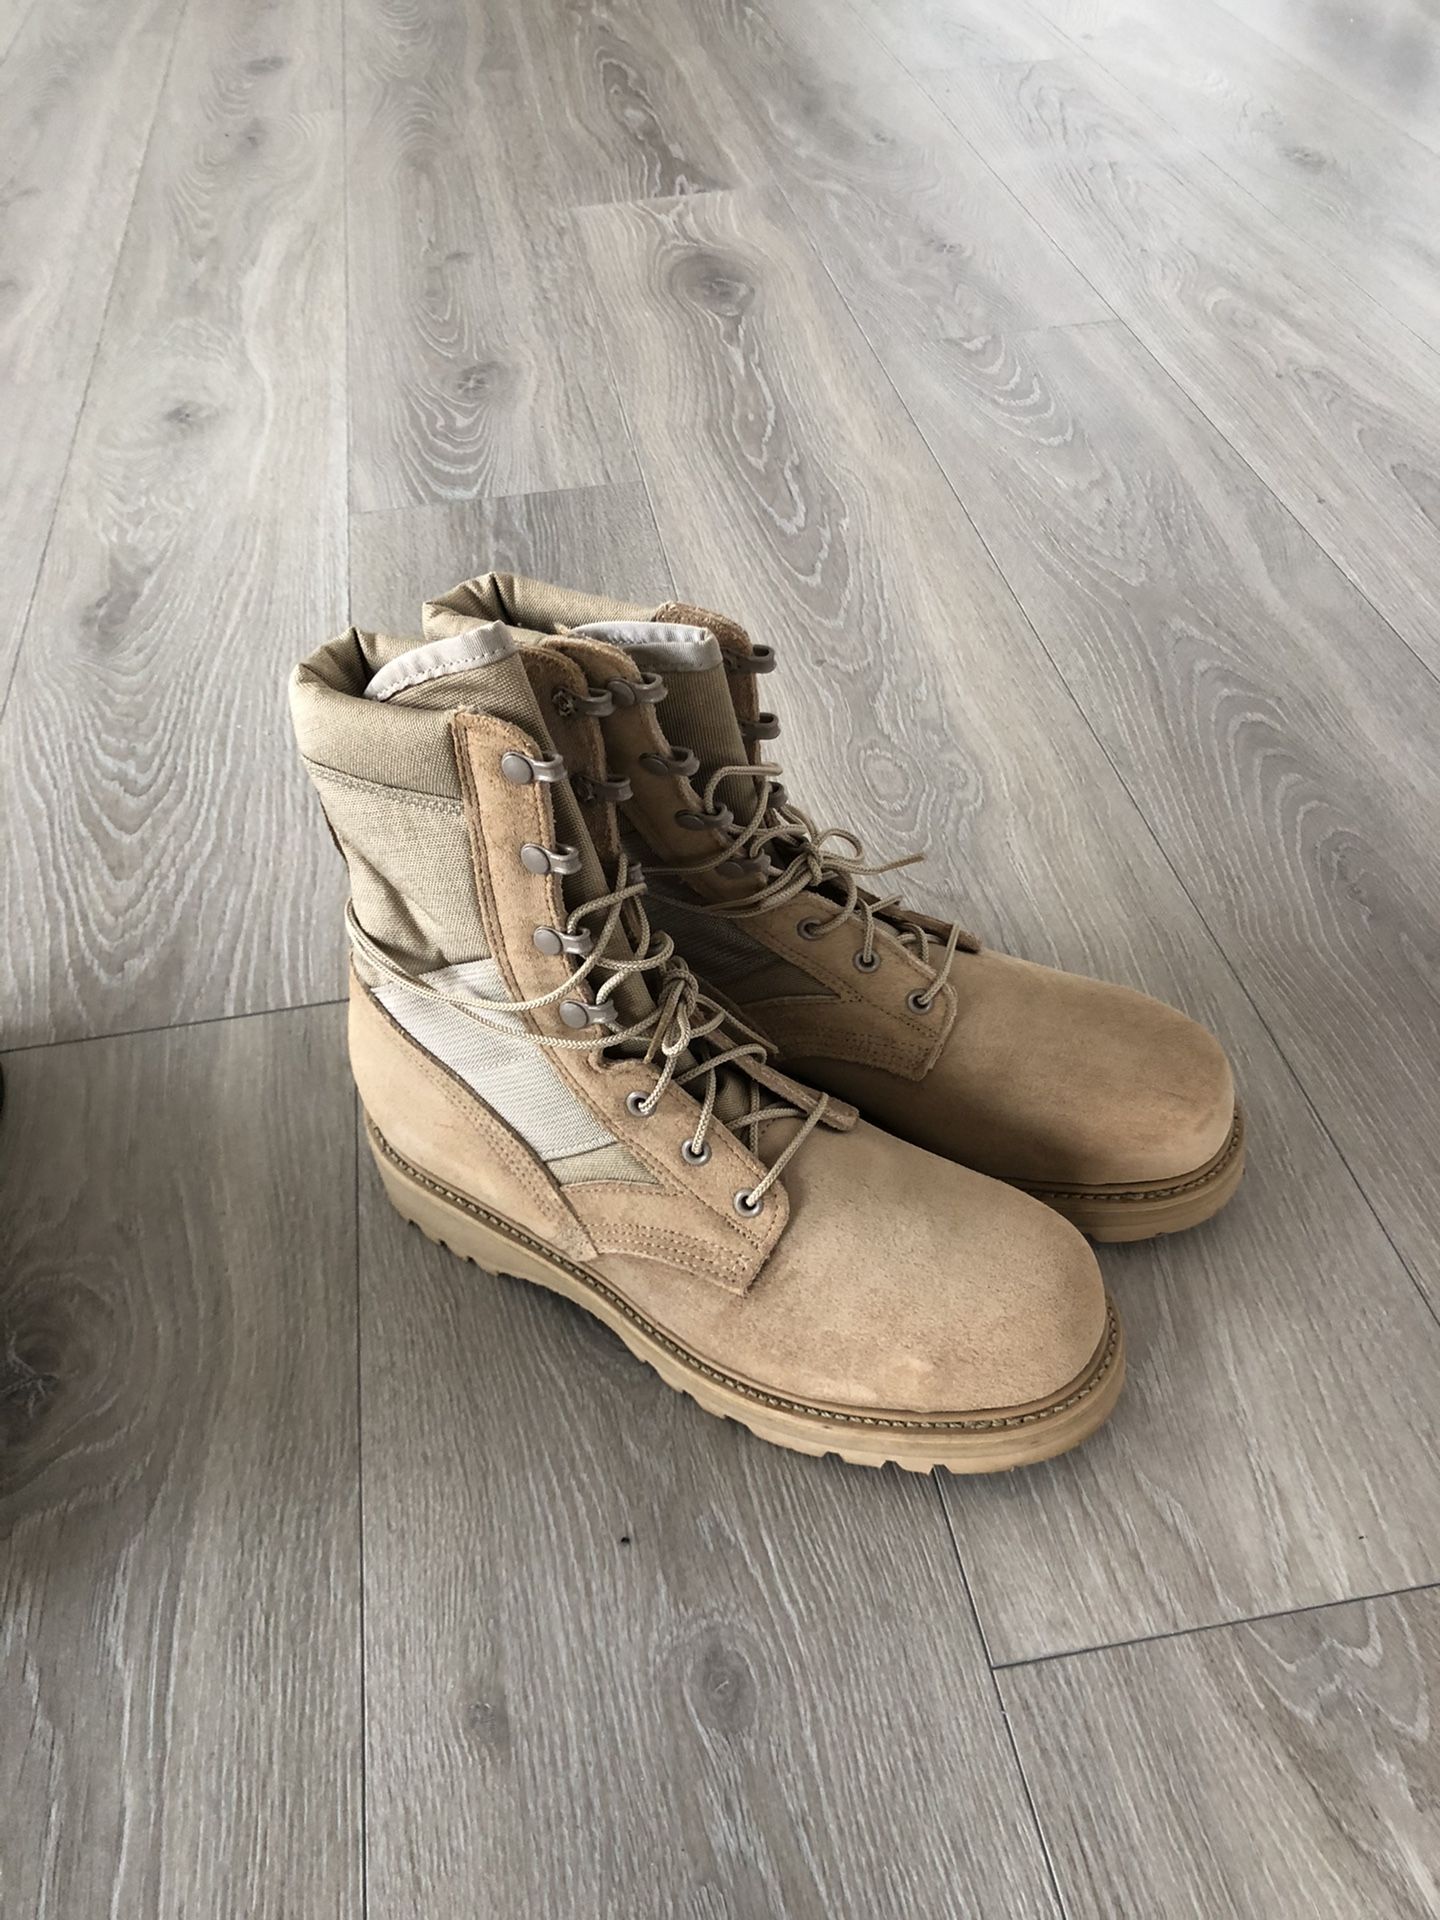 Vibram Military Boots Men size 9